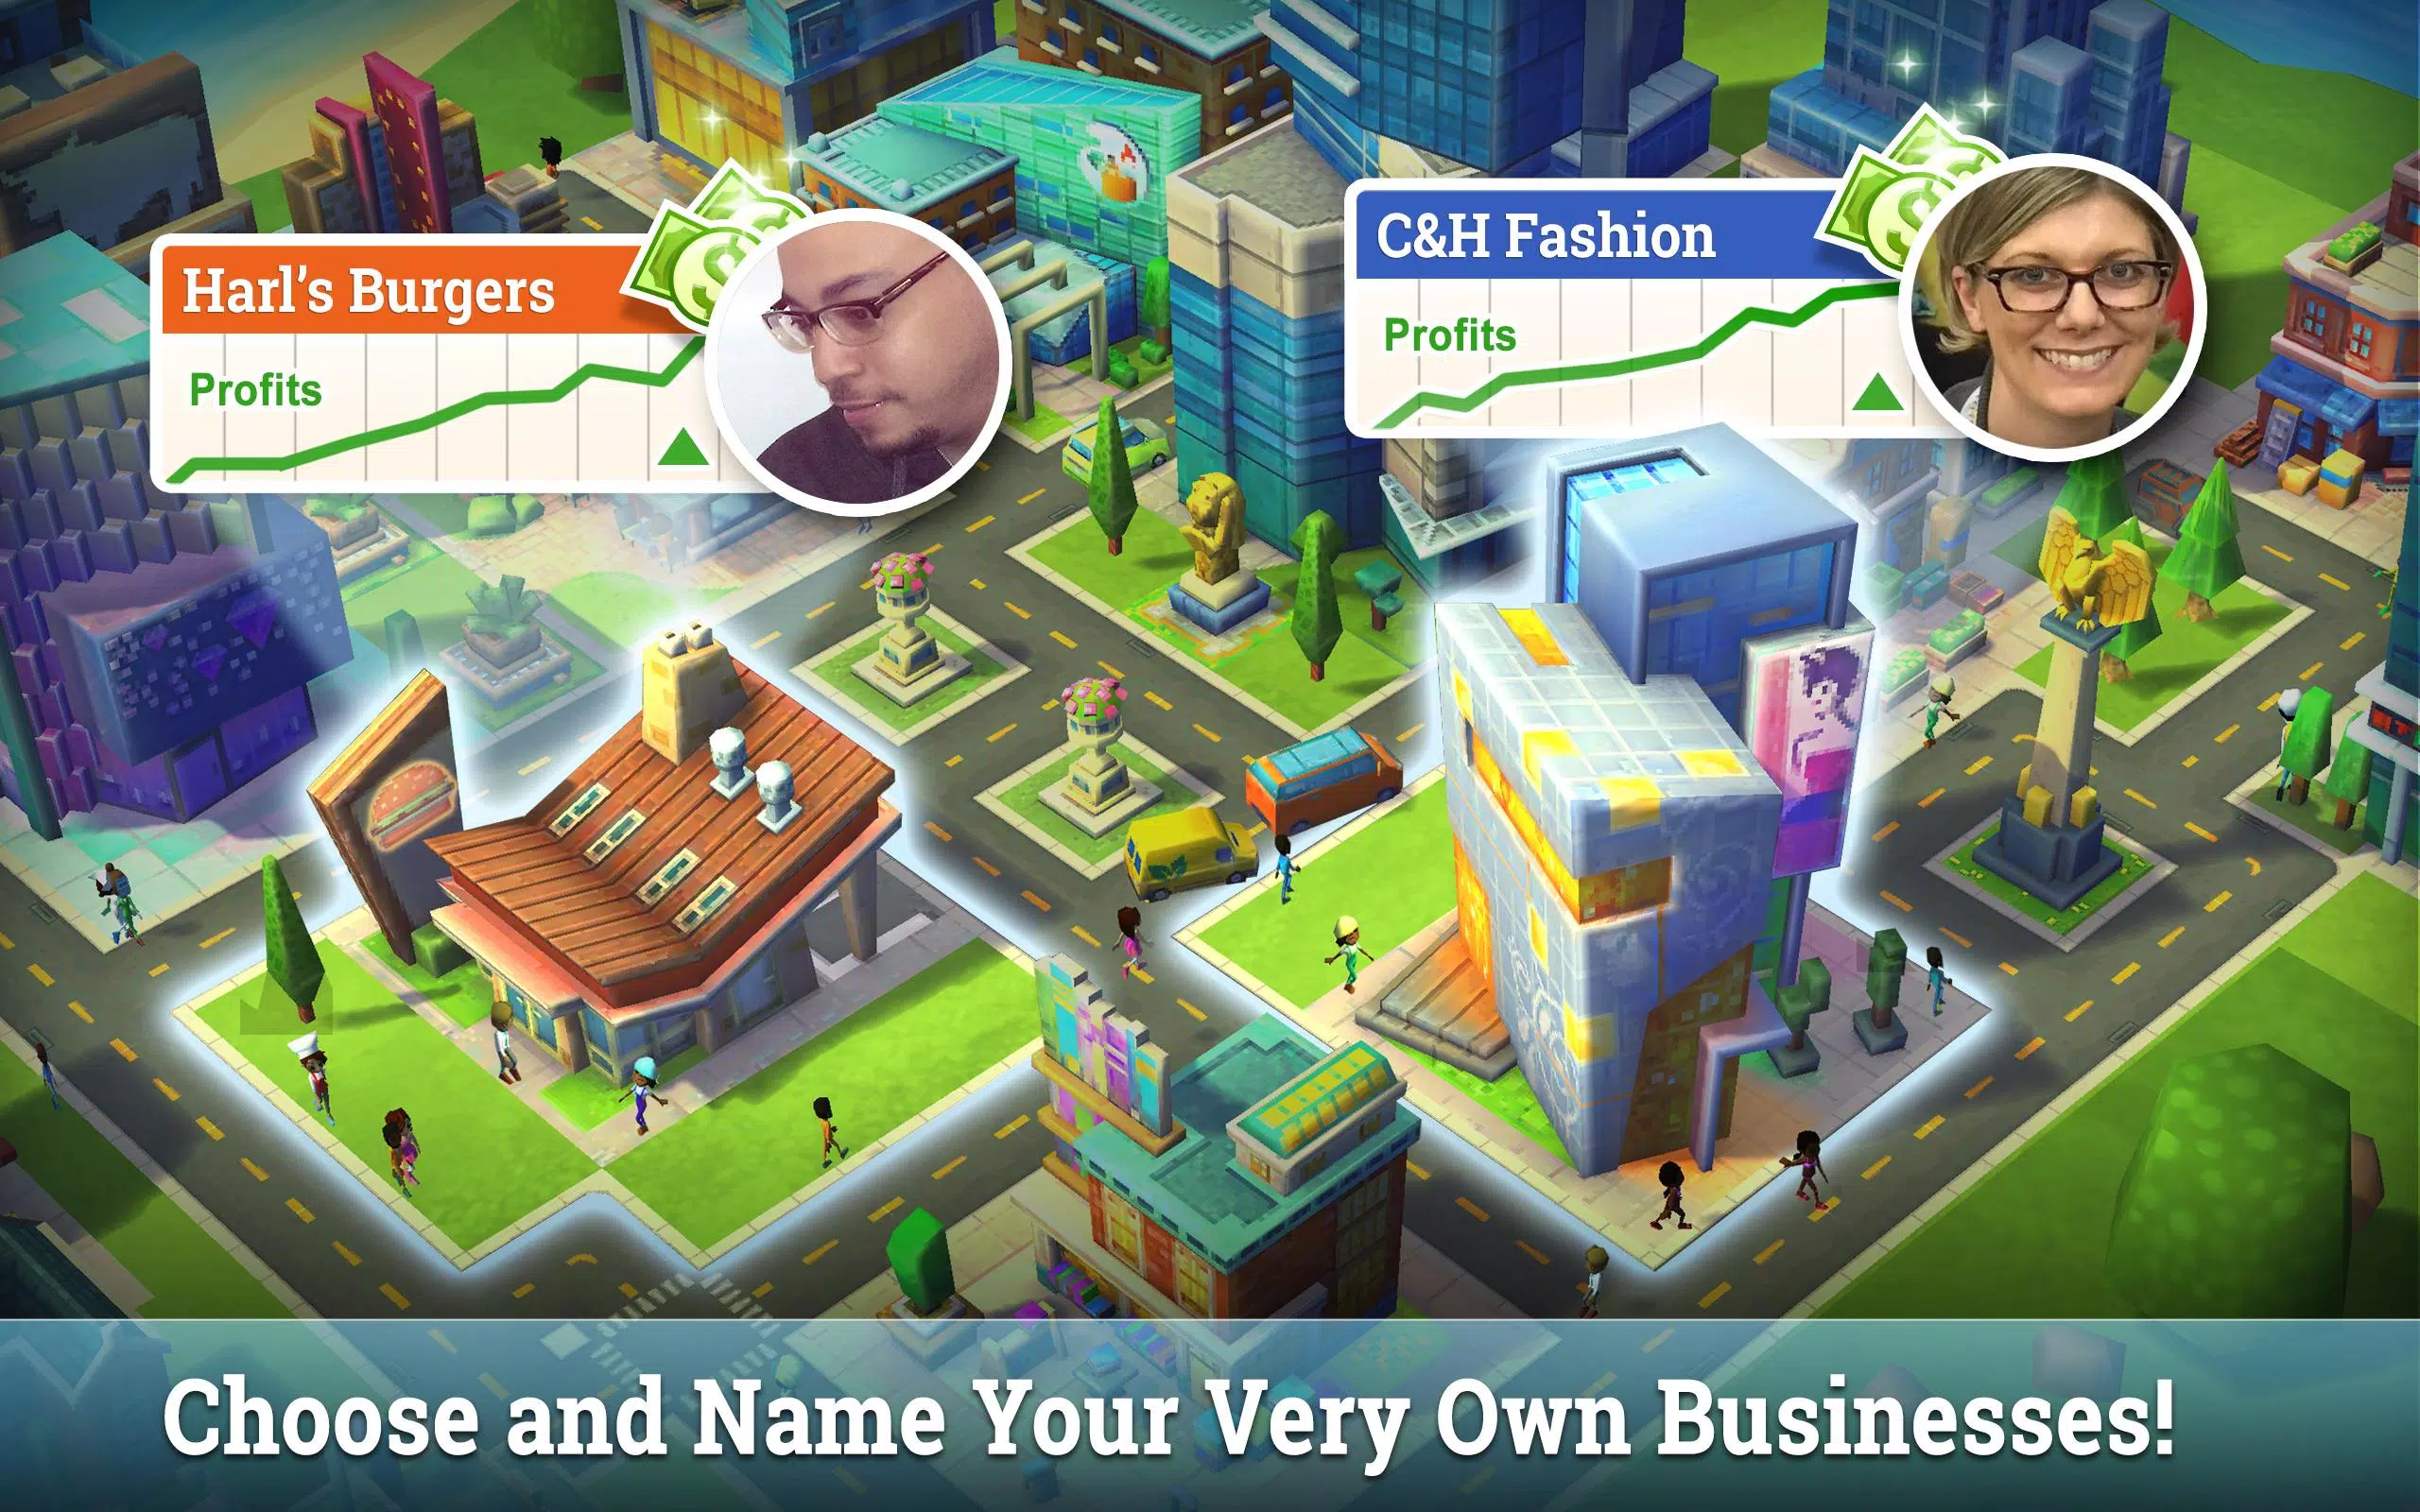 SunCity: City Builder Farming game like Cityville APK para Android